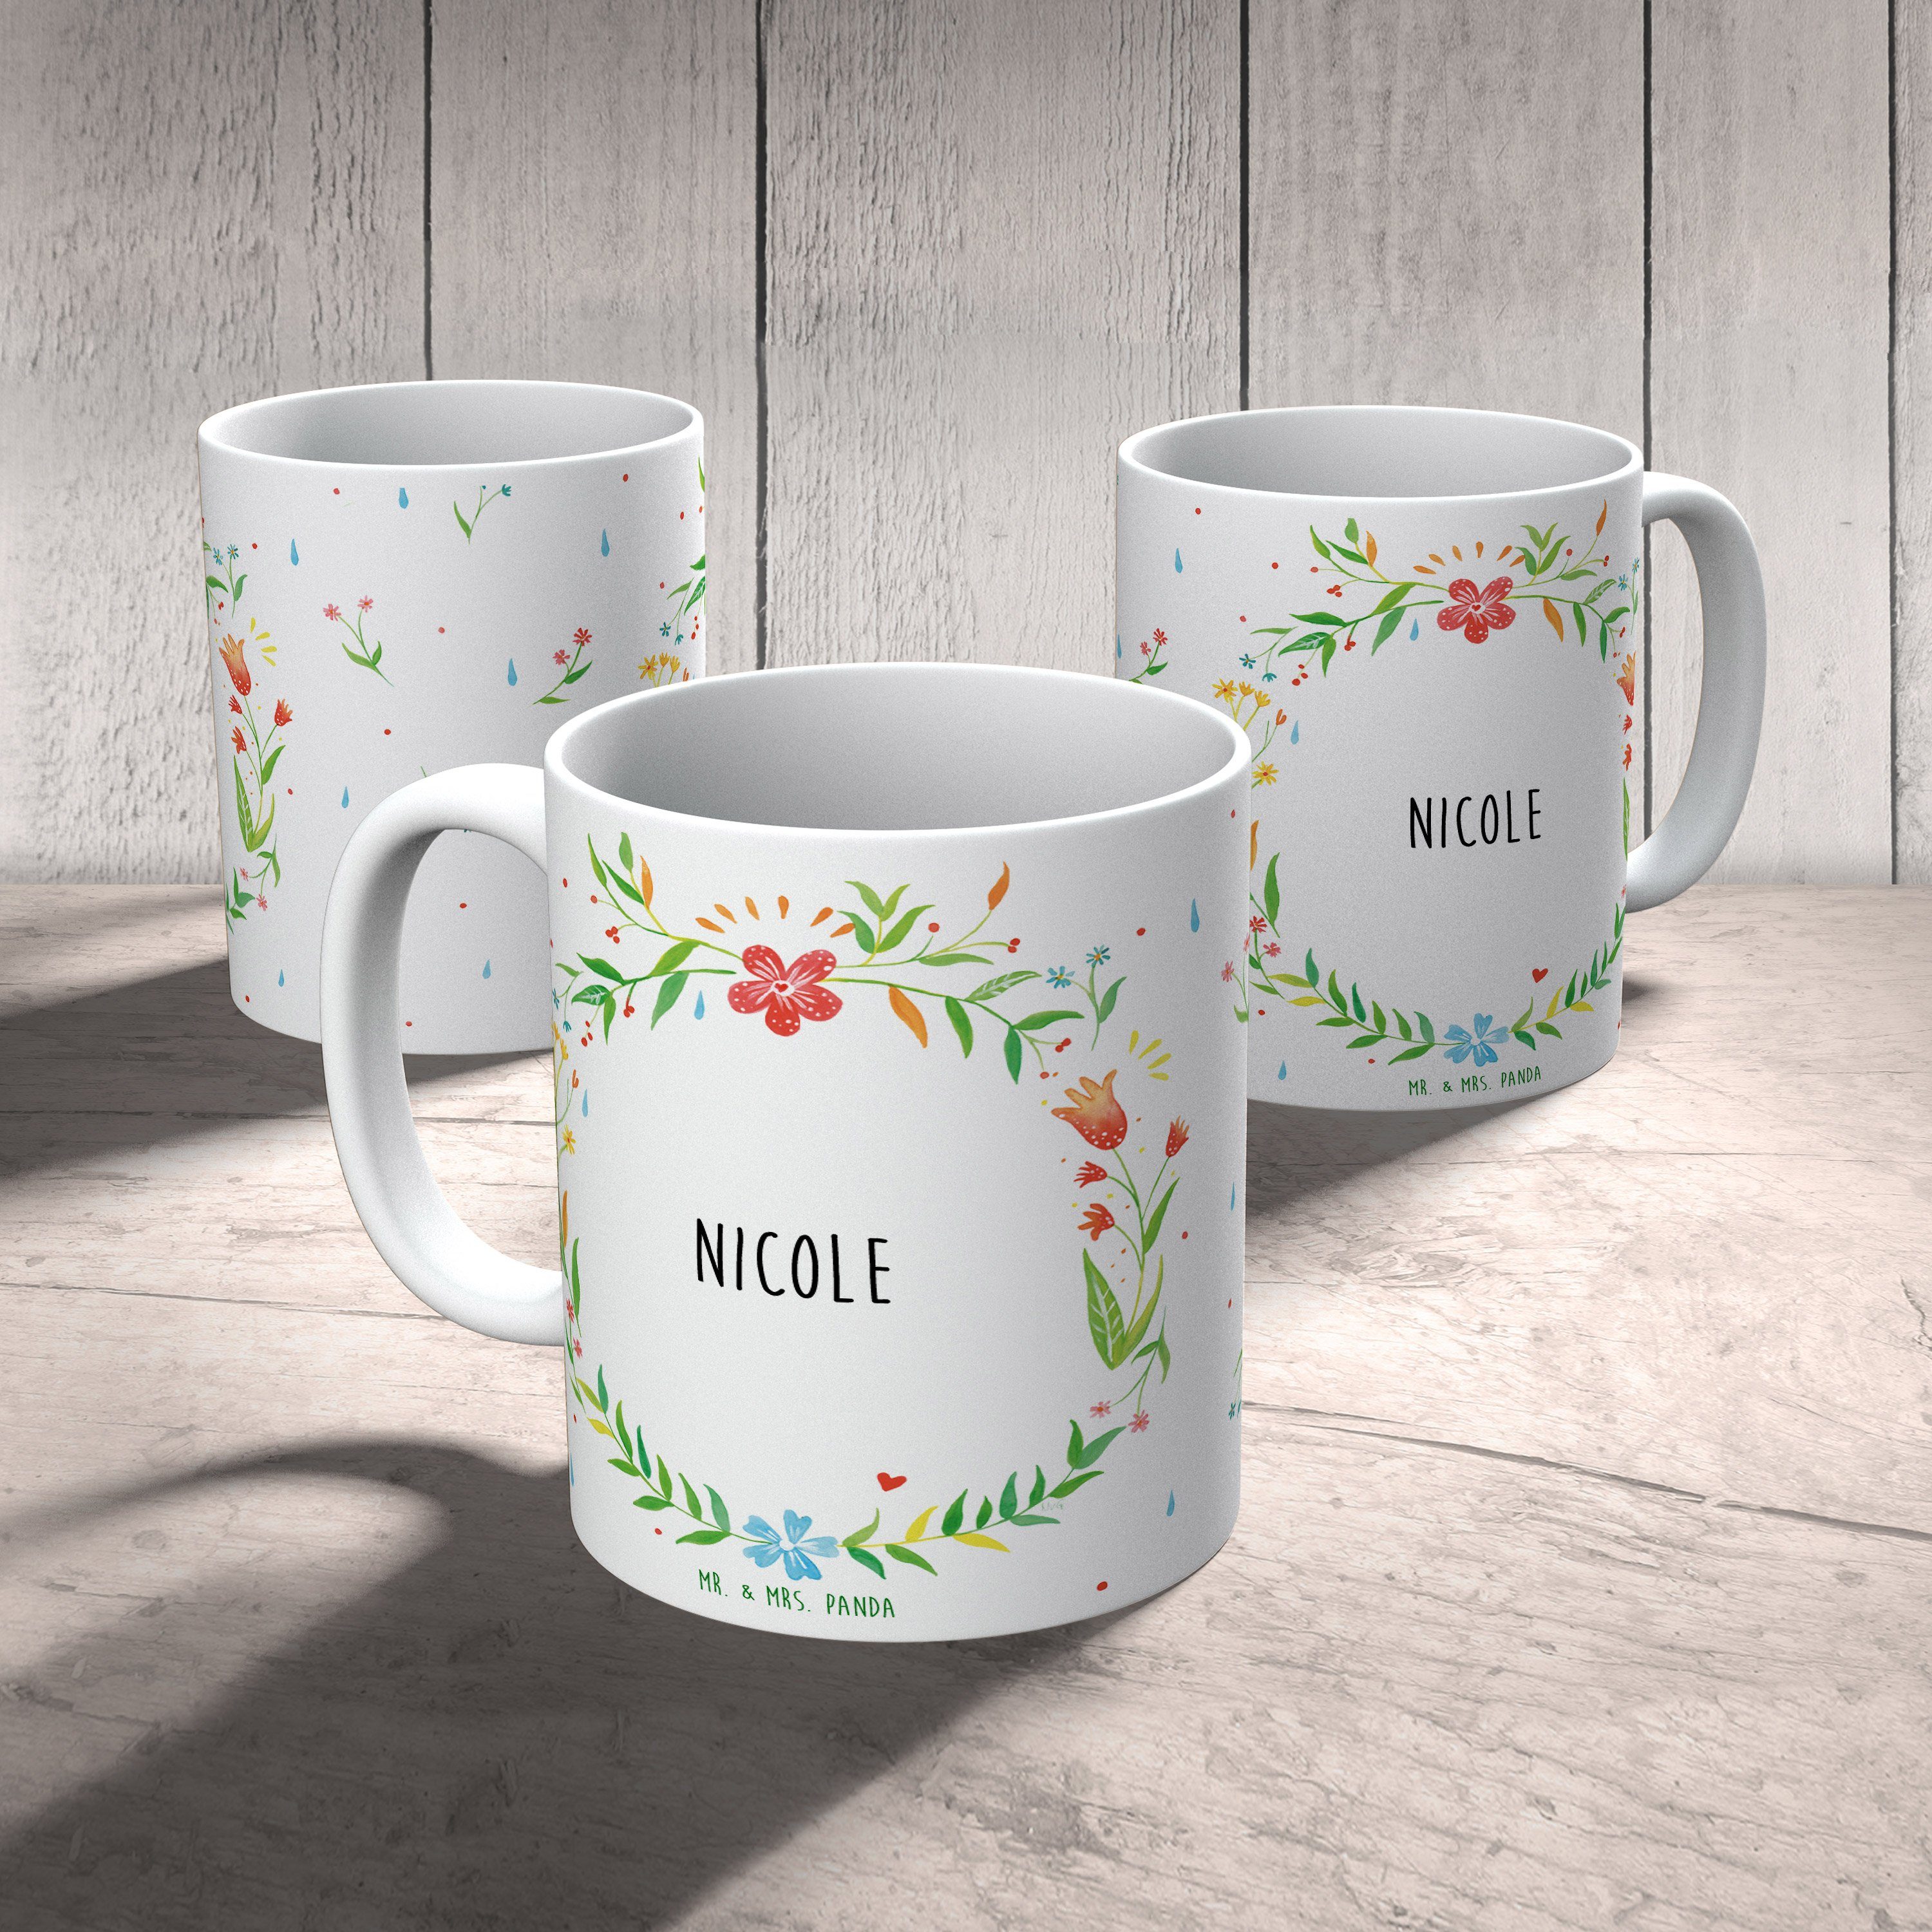 Mr. & Mrs. Panda Tasse Teebecher, Geschenk, Nicole Motive, Tasse - Tasse, Geschenk Kaffeetas, Keramik